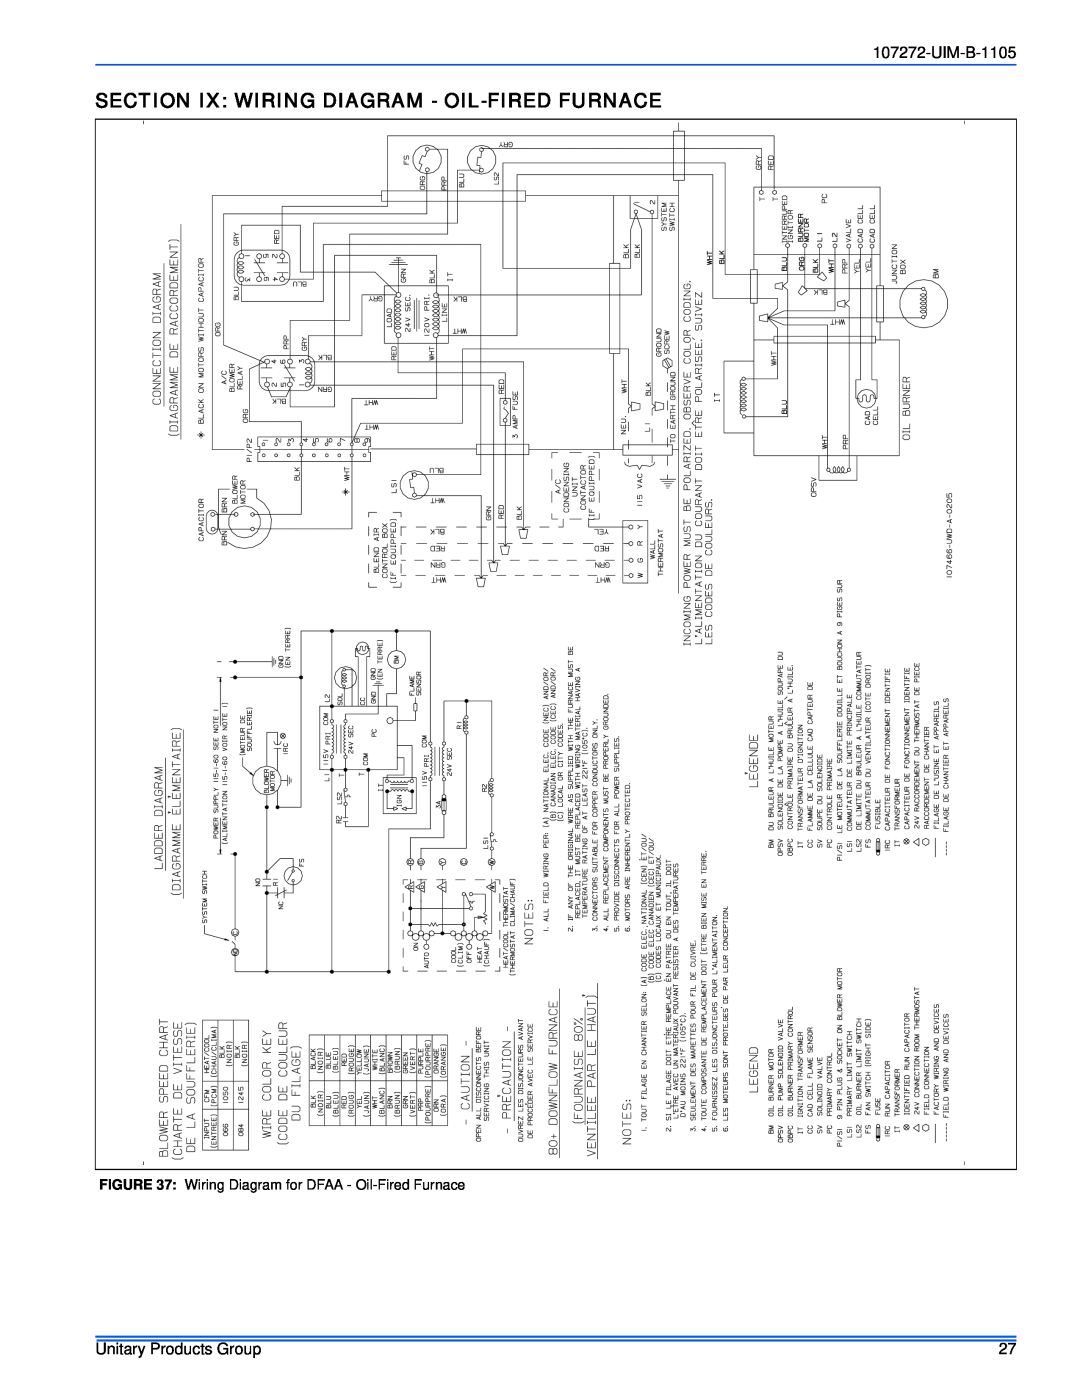 York DFAA, DFAH installation manual Section Ix: Wiring Diagram - Oil-Firedfurnace, UIM-B-1105, Unitary Products Group 